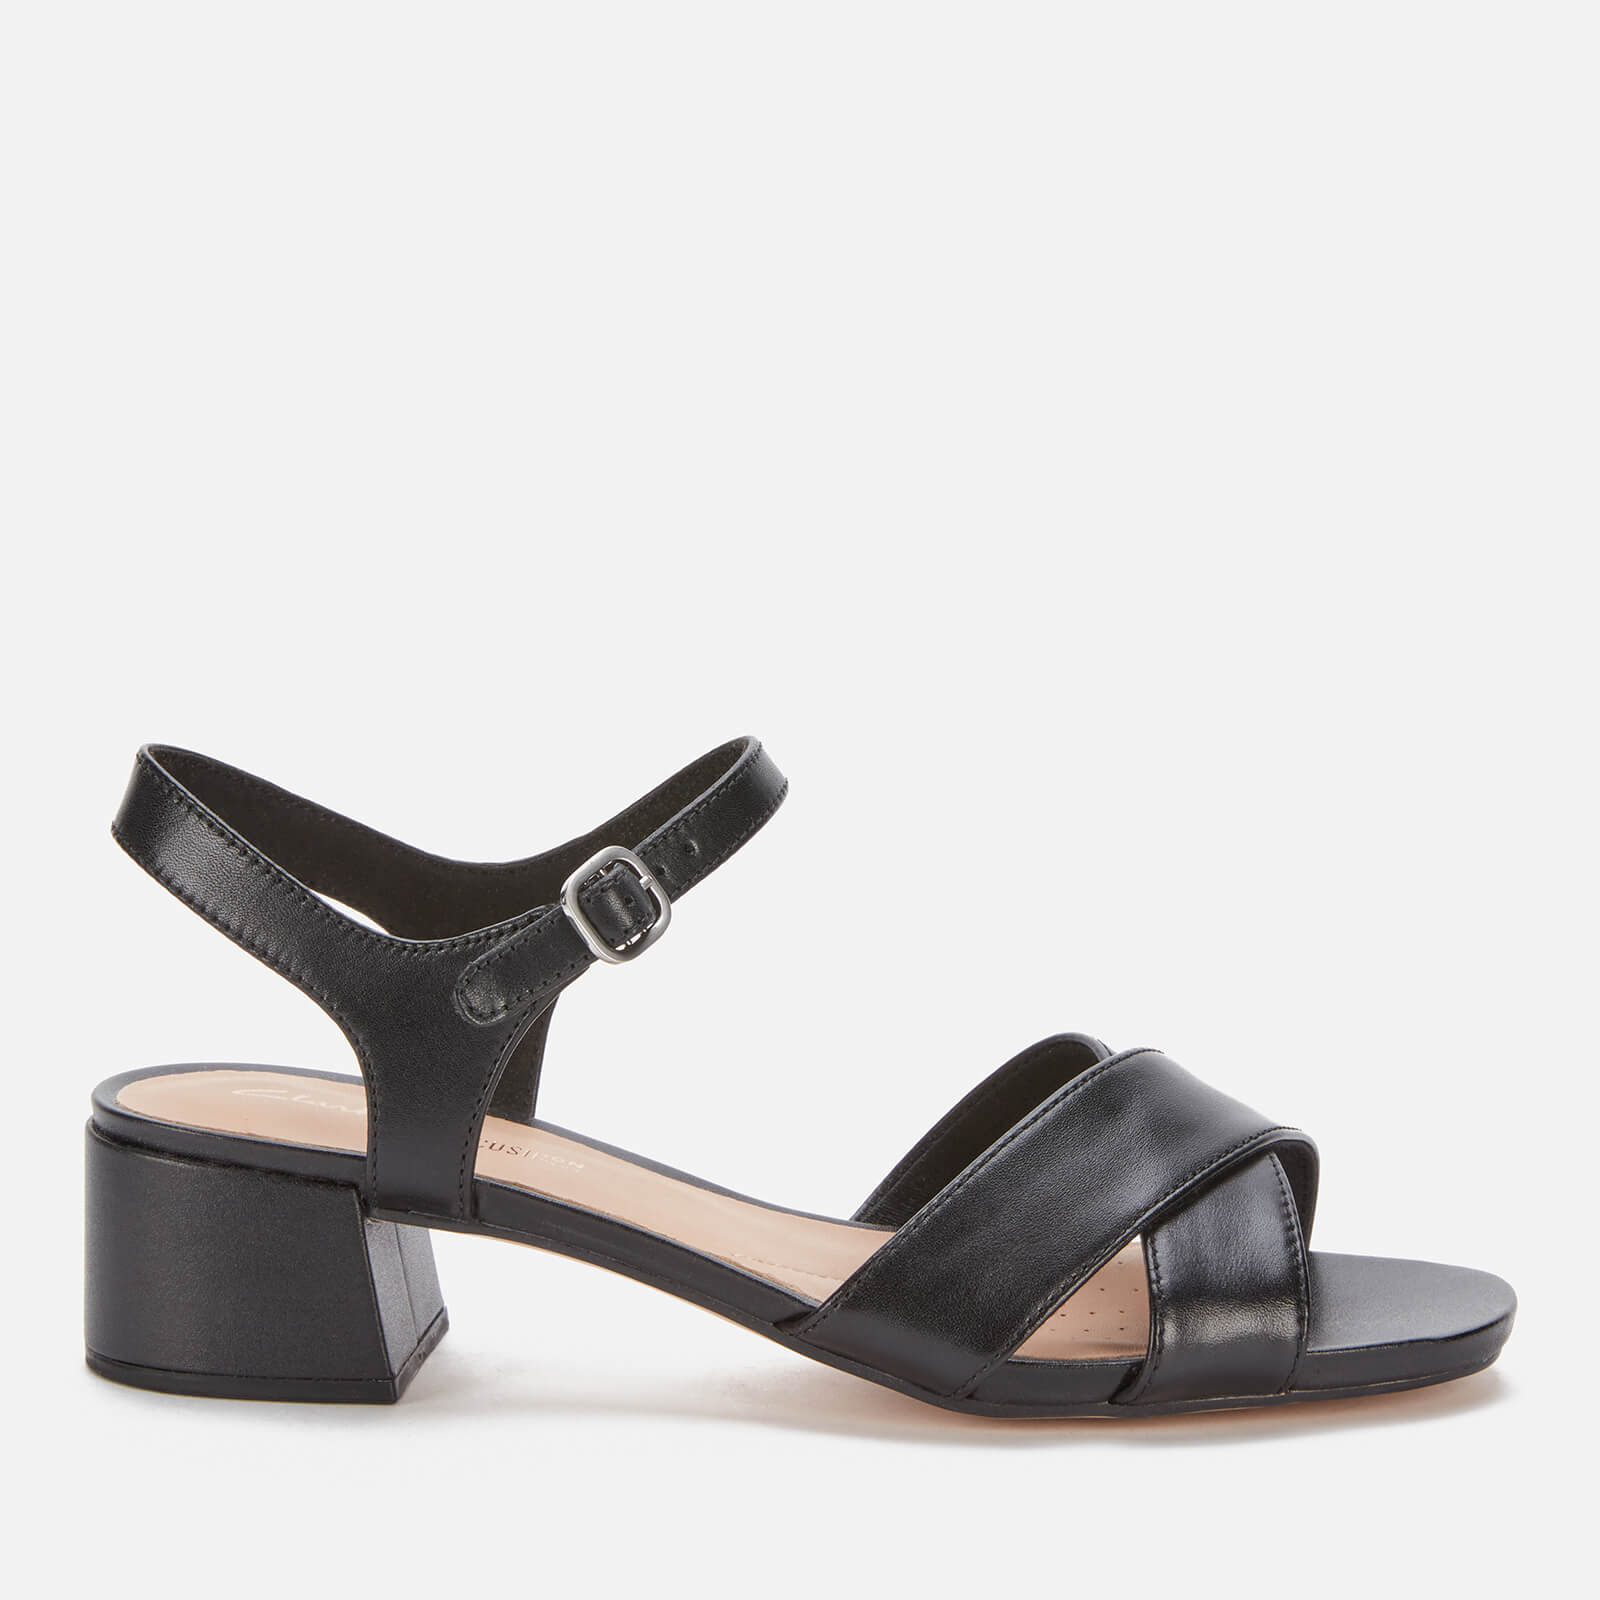 Image of Clarks Women's Sheer35 Strap Leather Block Heeled Sandals - Black - UK 3